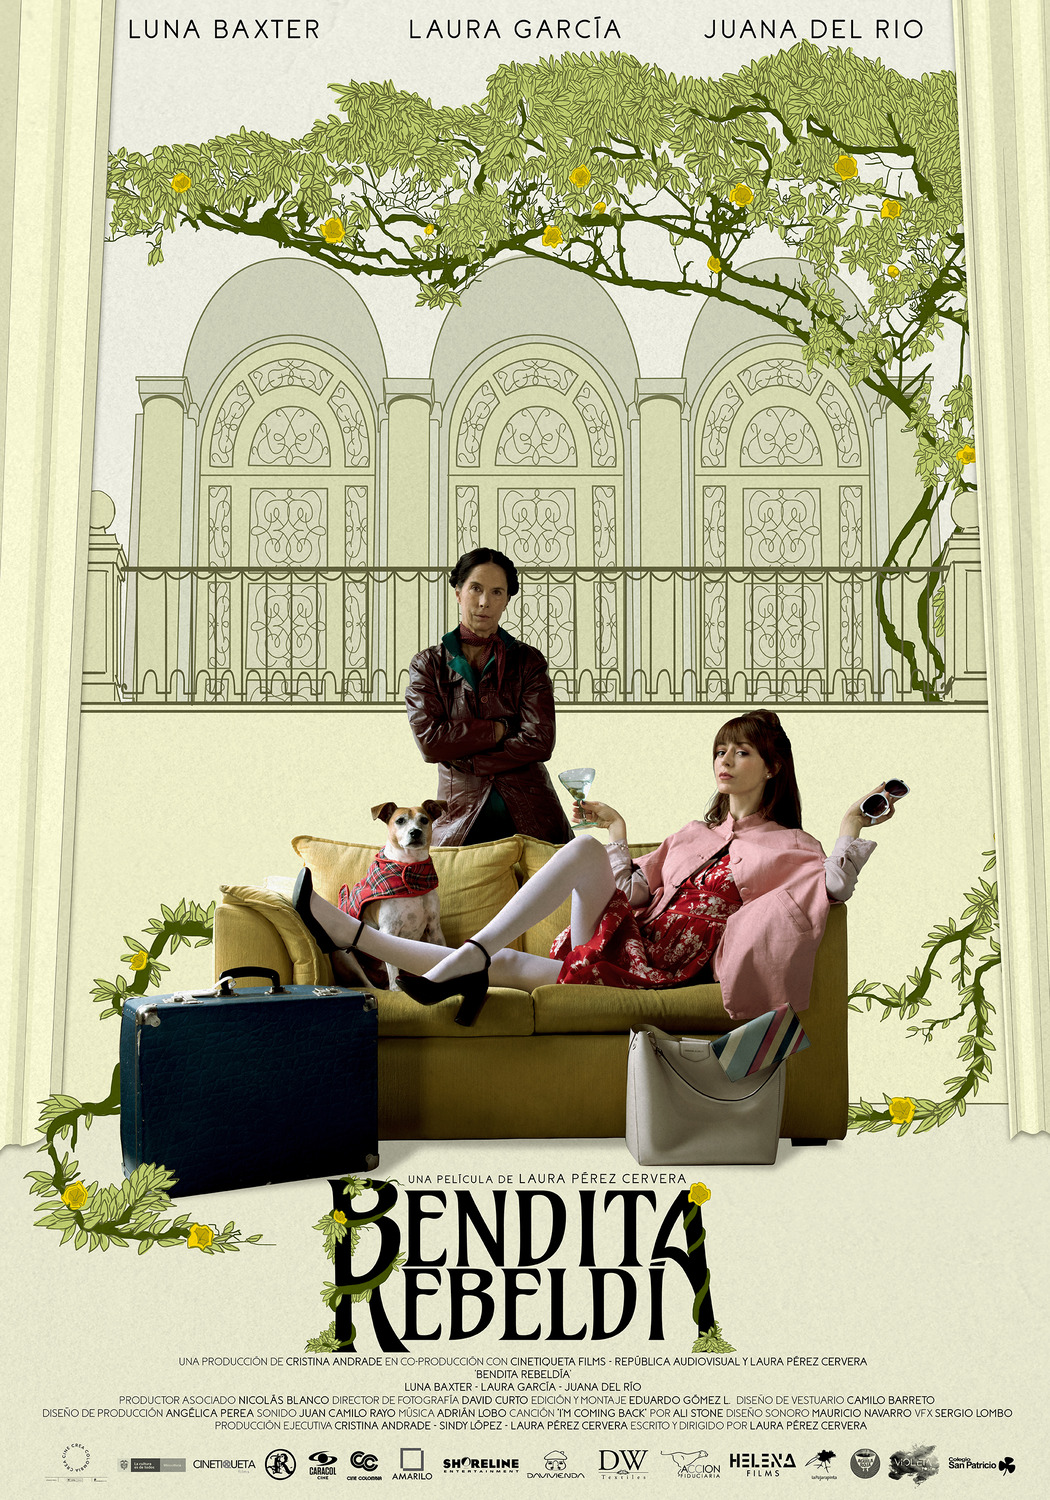 Extra Large Movie Poster Image for Bendita Rebeldía 